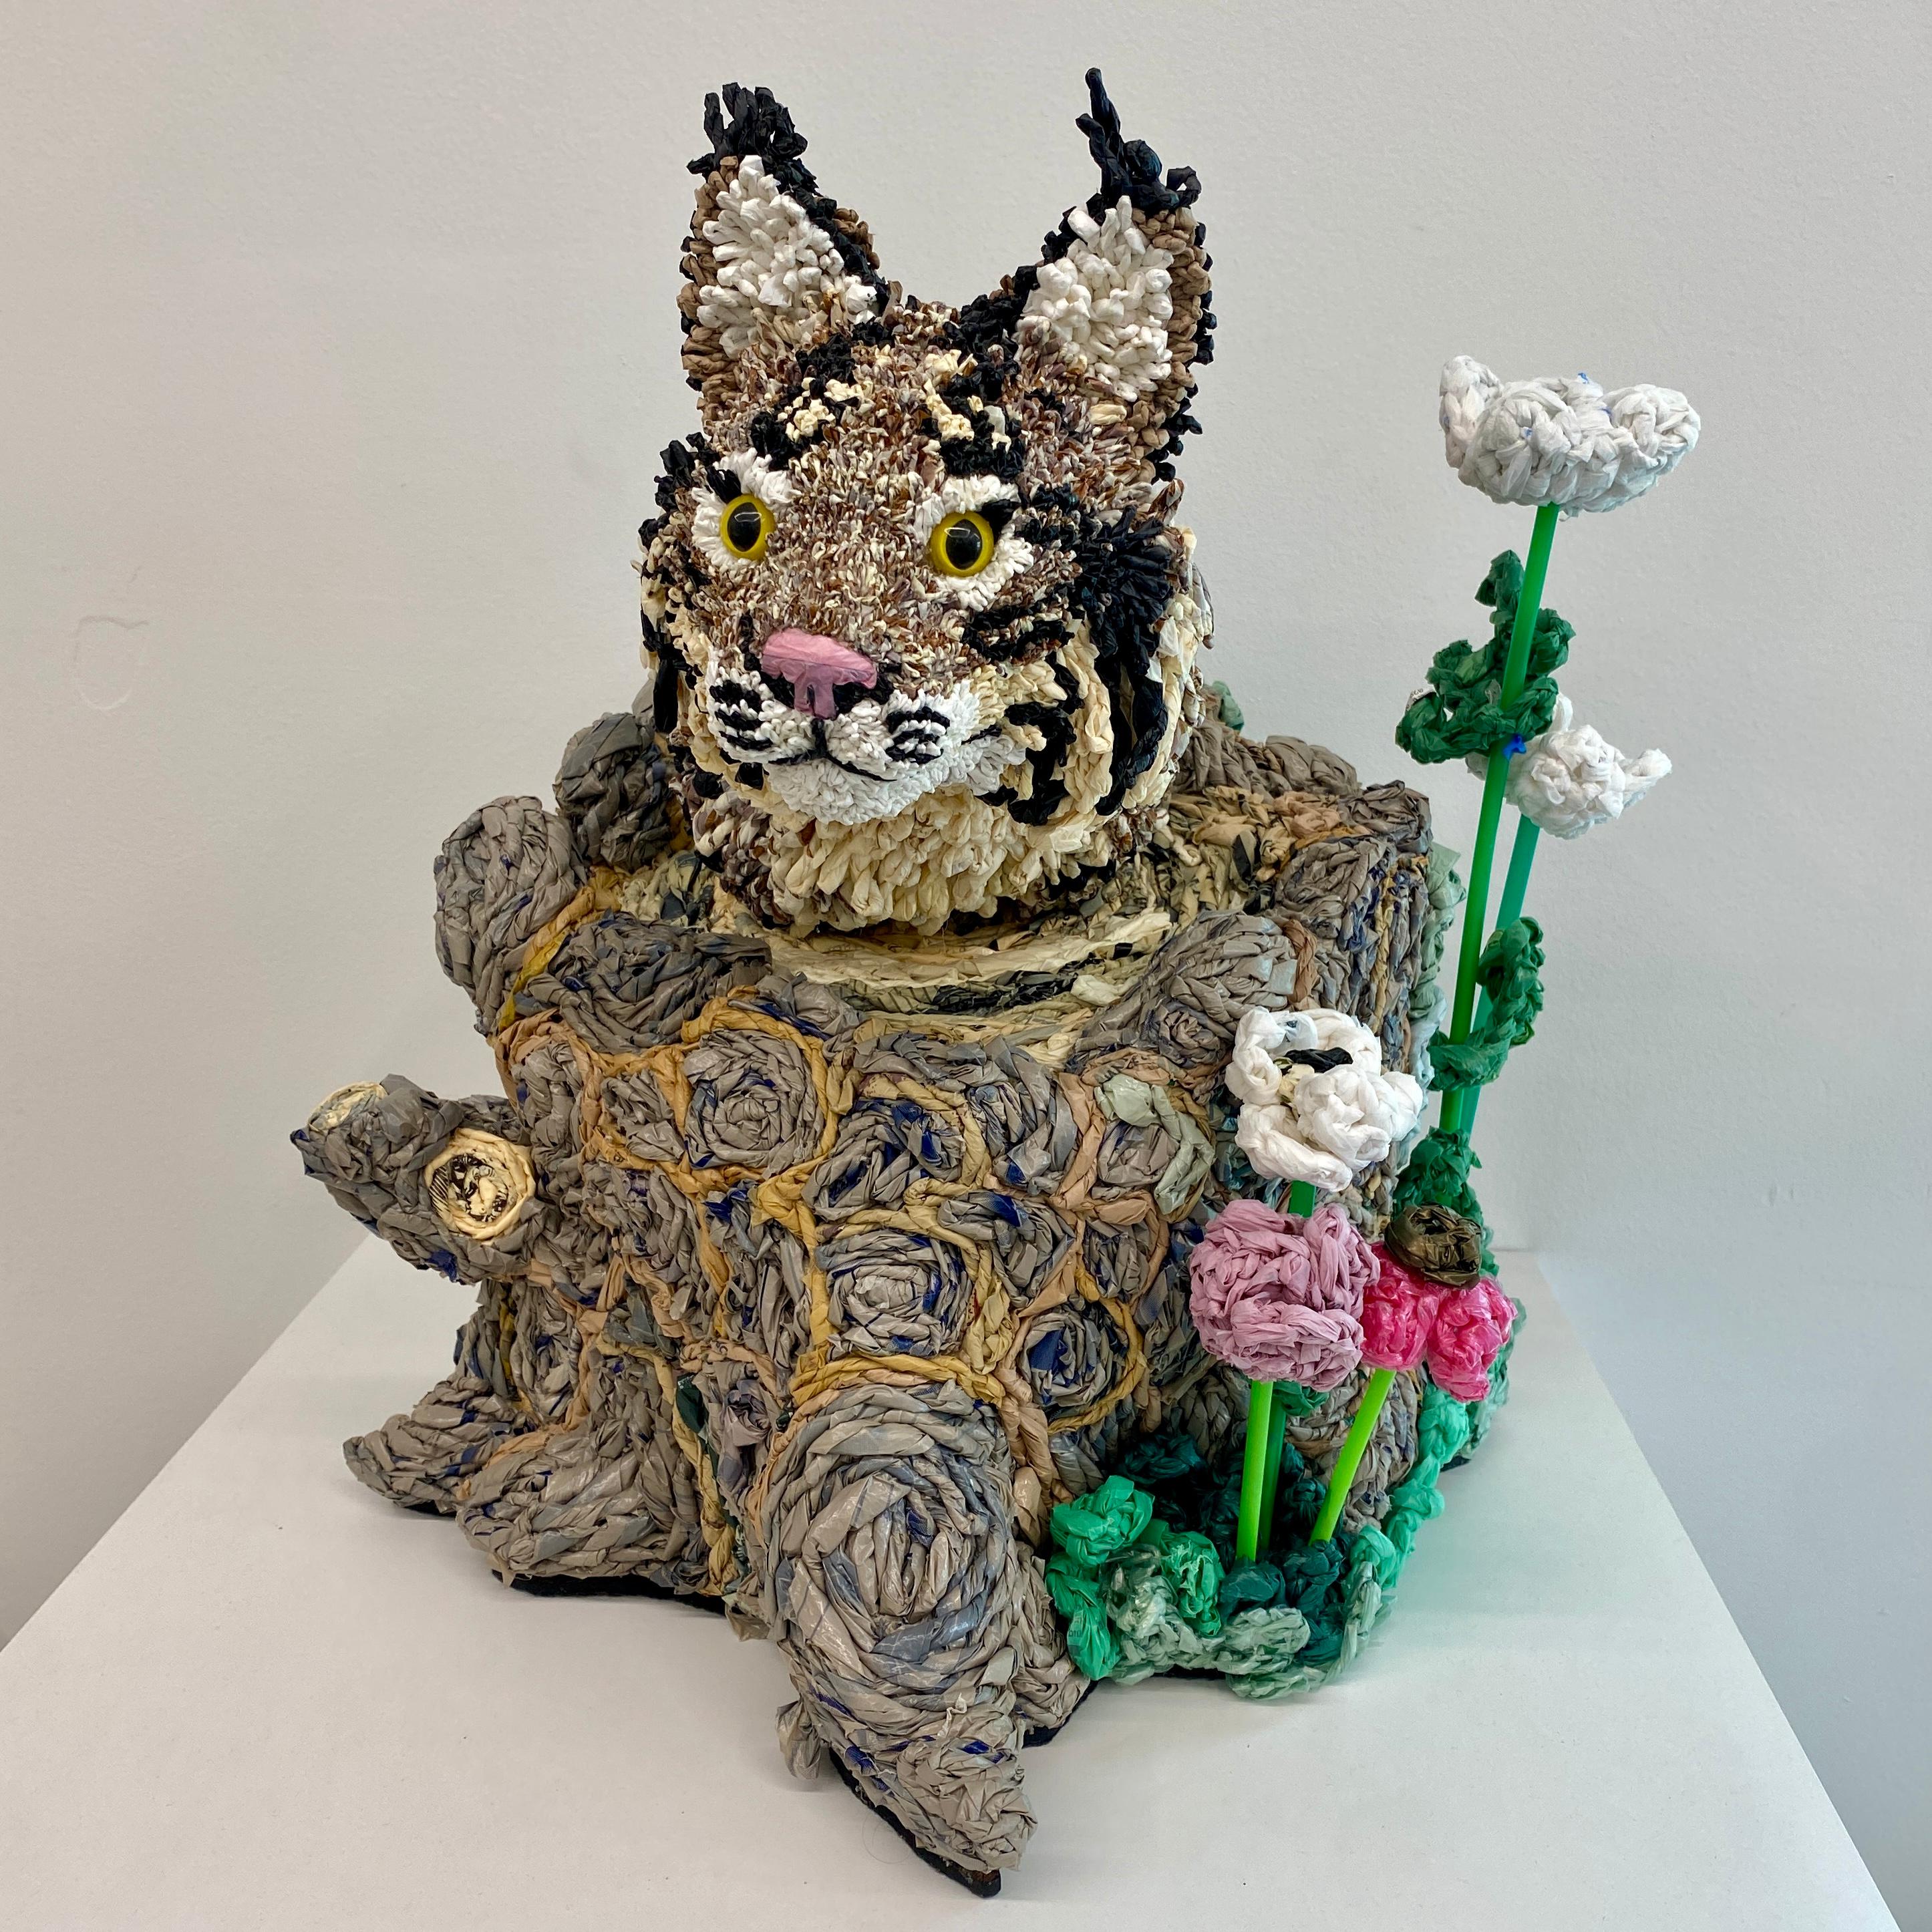 Calder Kamin Still-Life Sculpture - Plastic Planet Lynx, Contemporary Animal Sculpture, Recycled Materials 